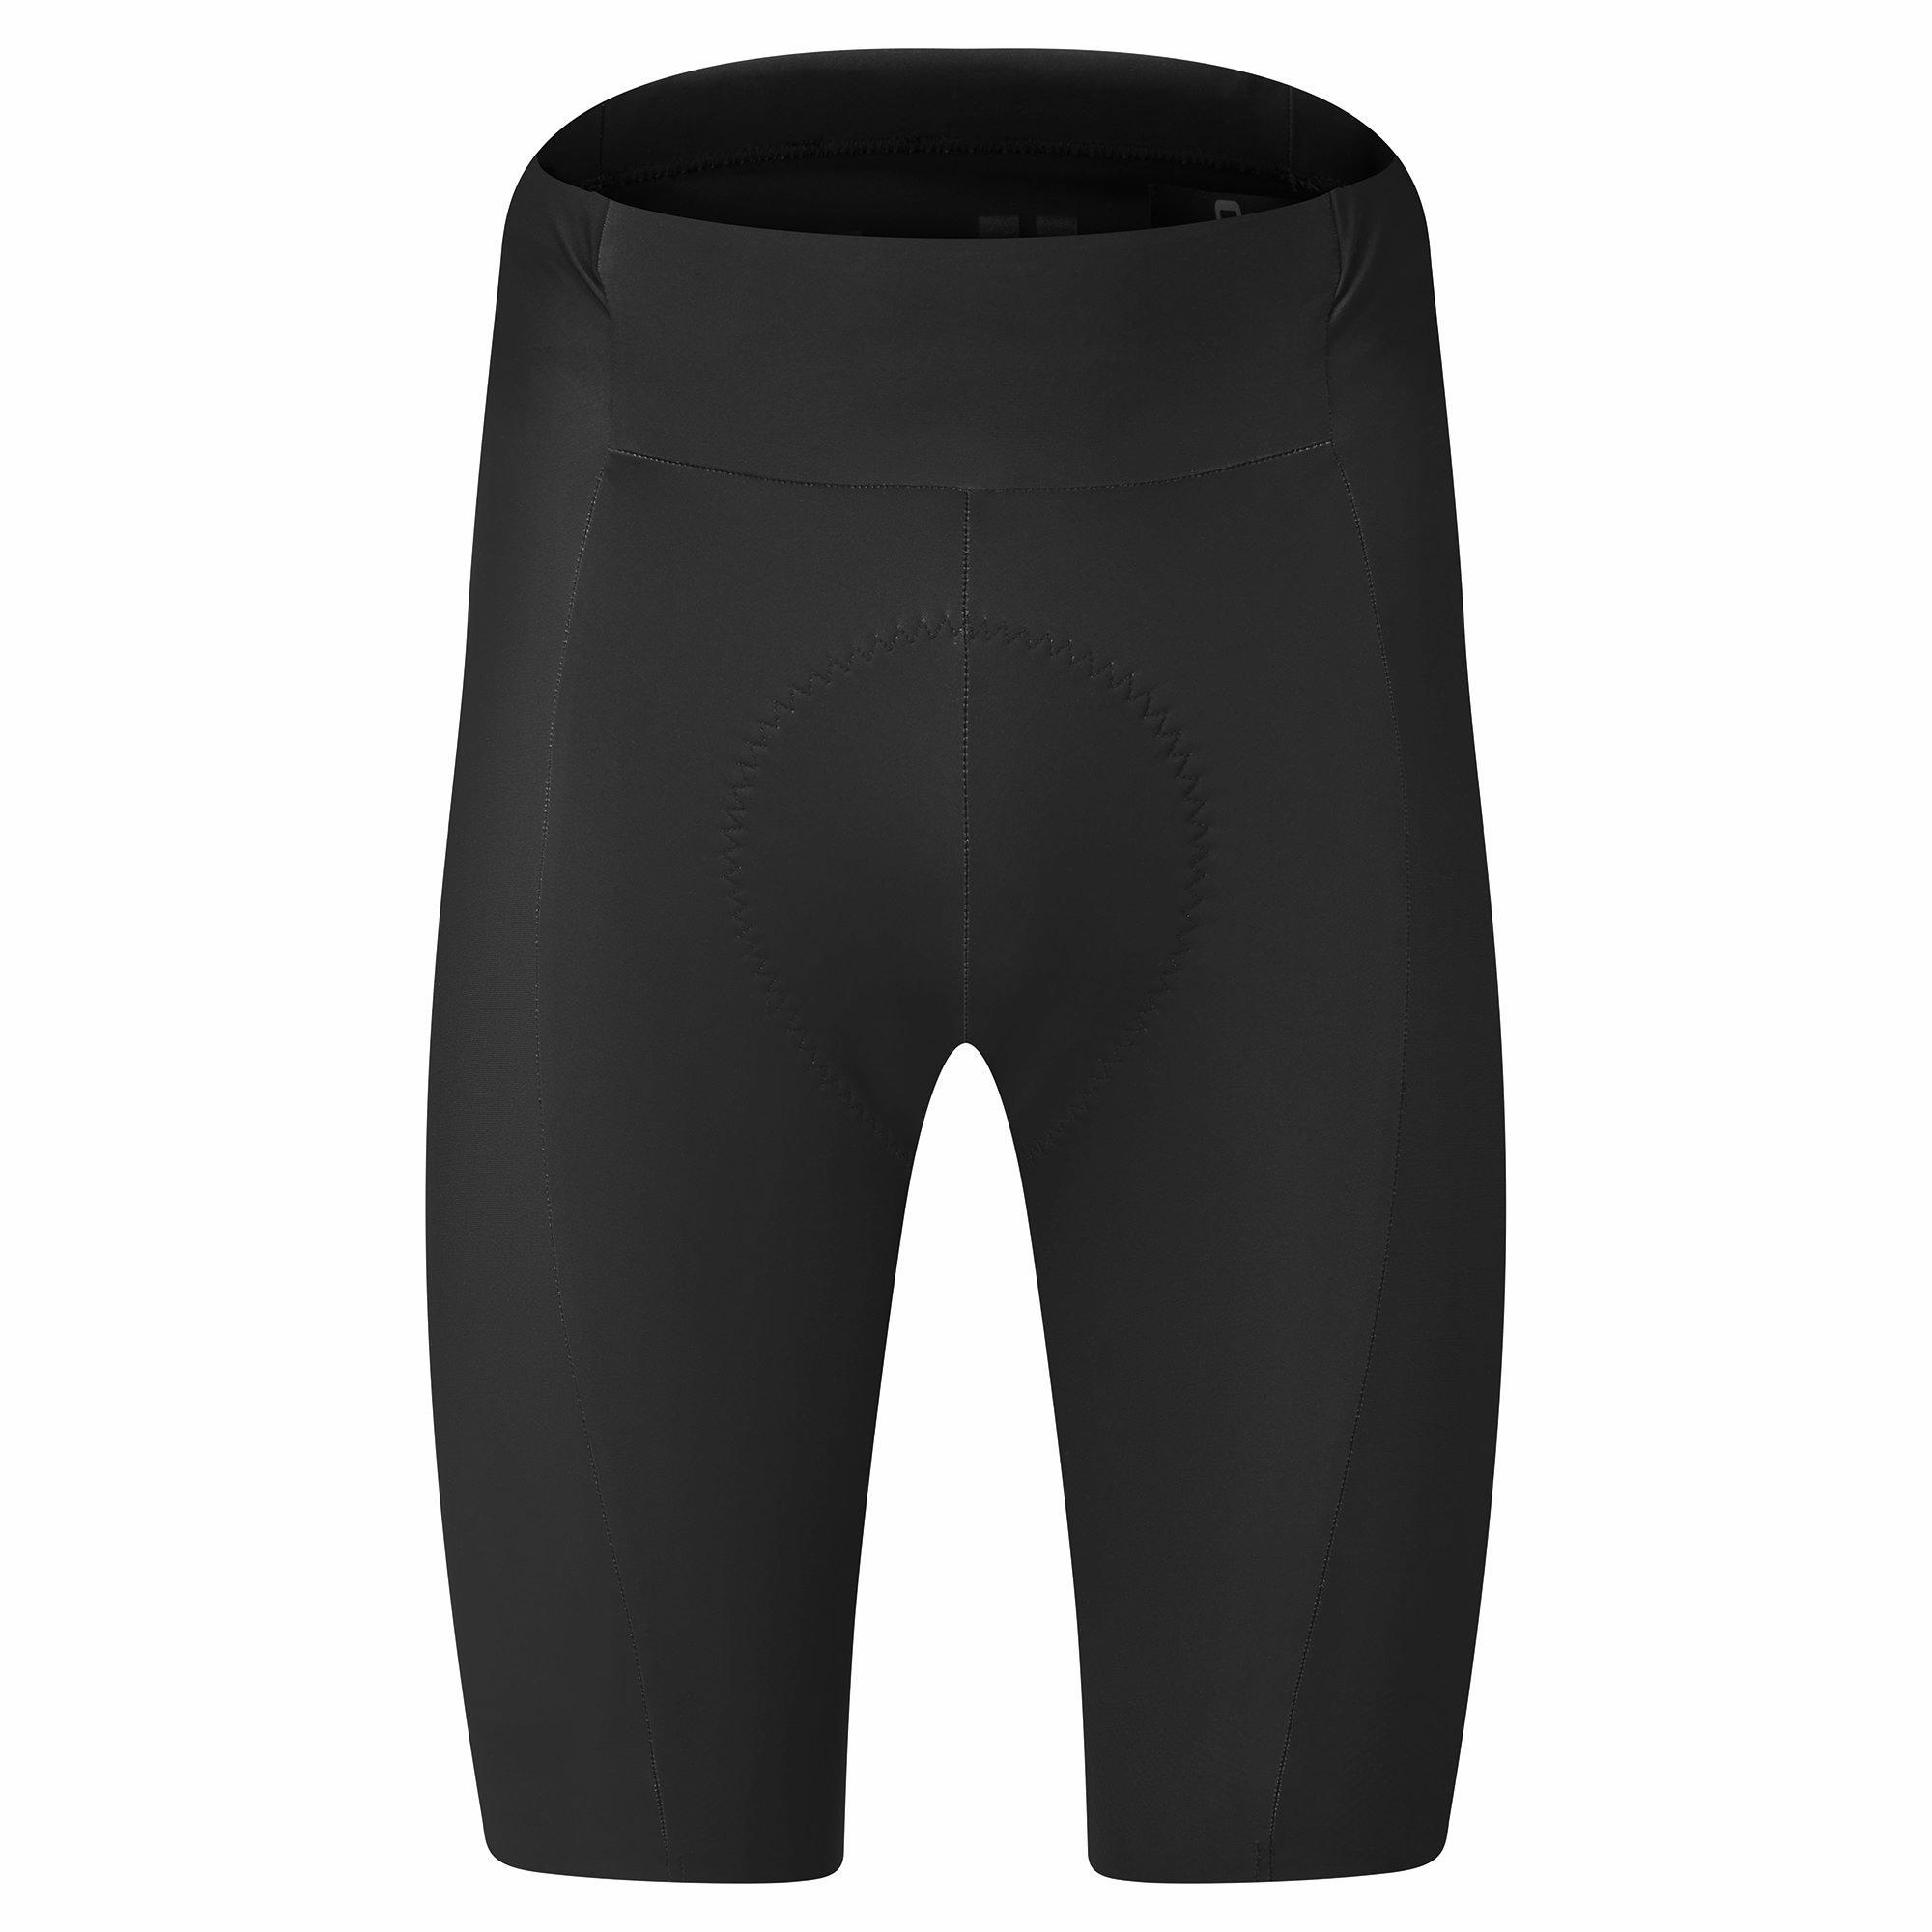 Dhb Aeron Mens Shorts 2.0 - Black/black